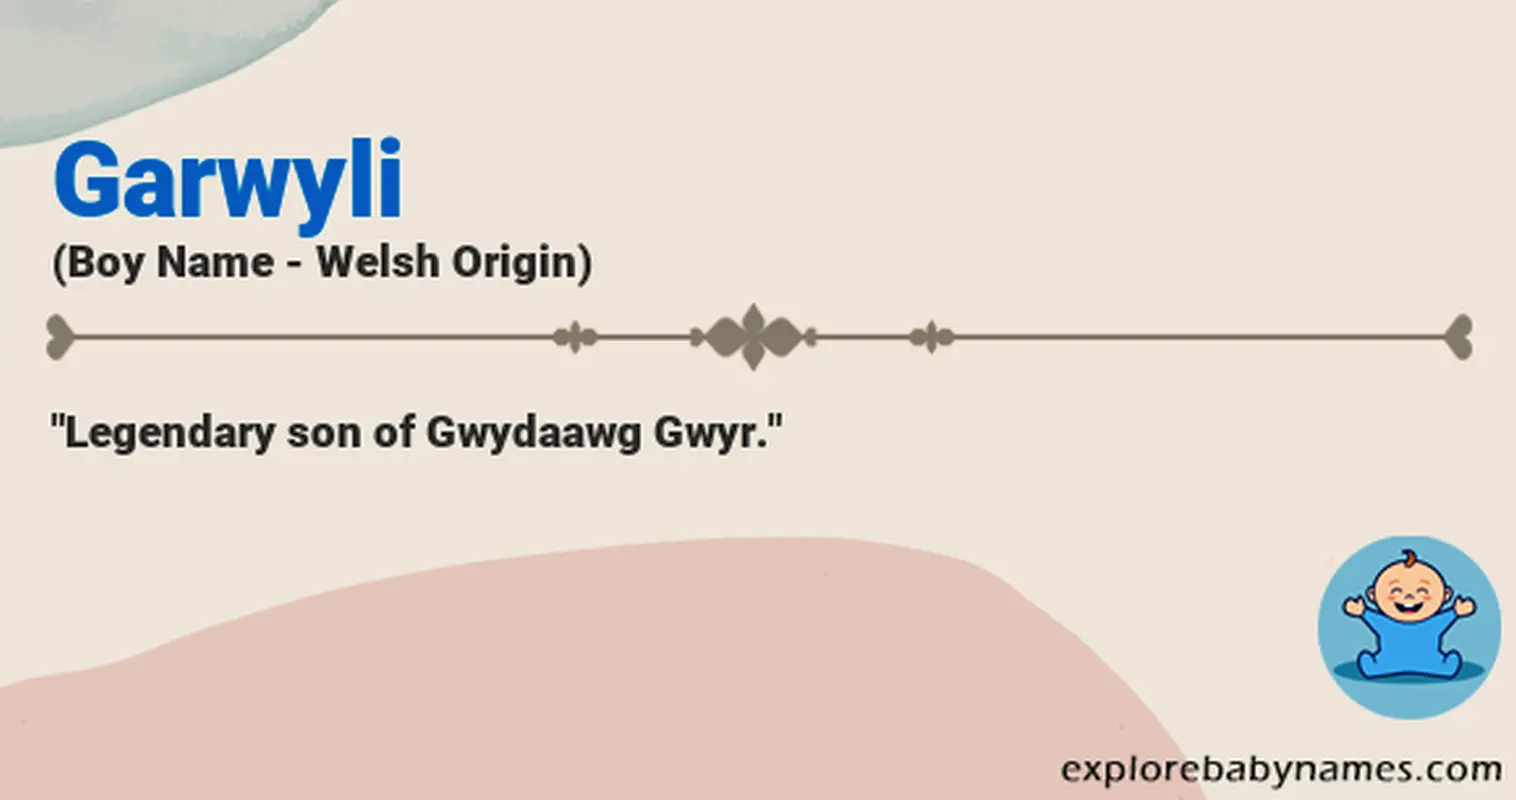 Meaning of Garwyli